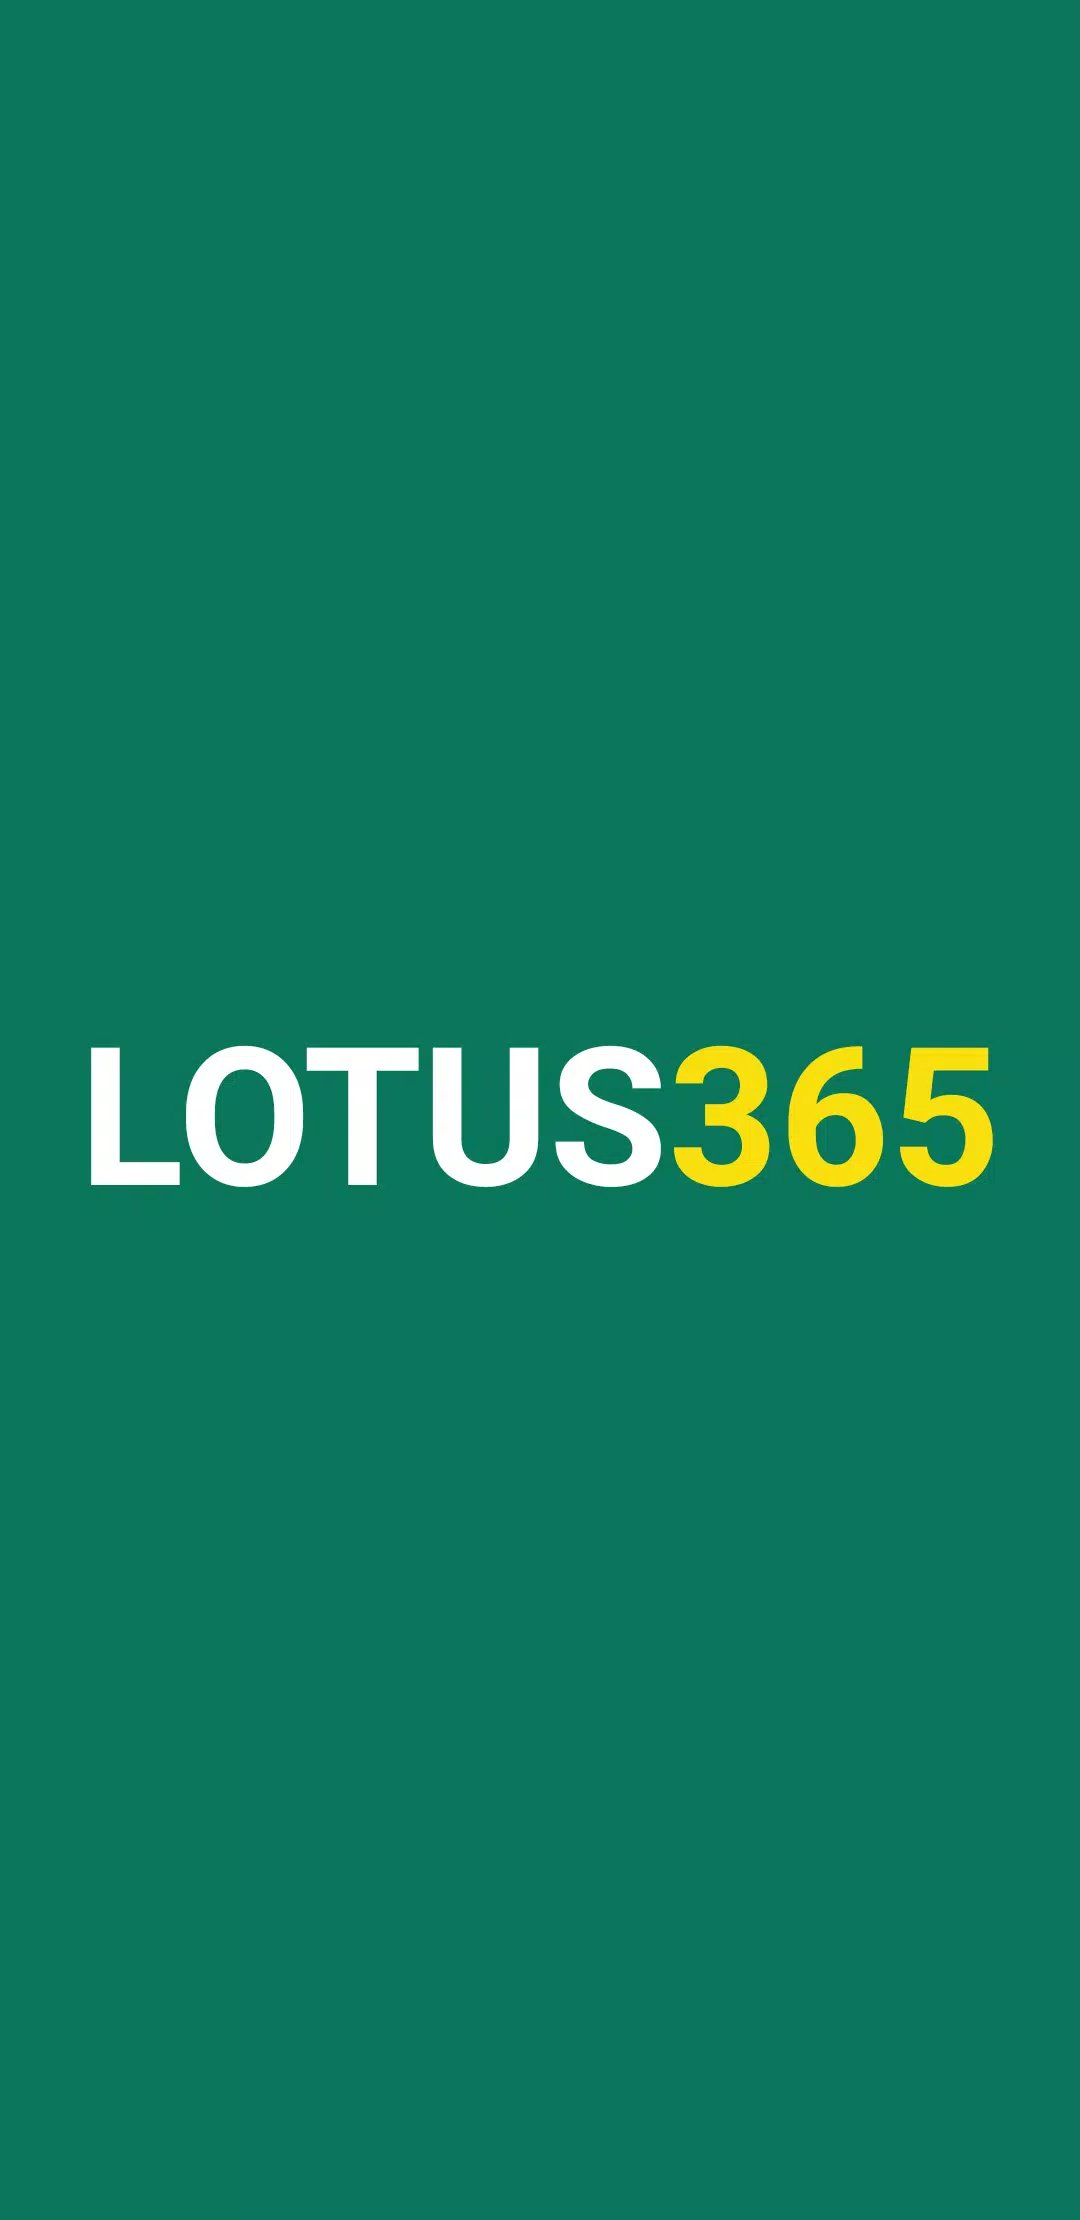 Effortlessly Download Lotus 365 Apk: Step-By-Step Guide